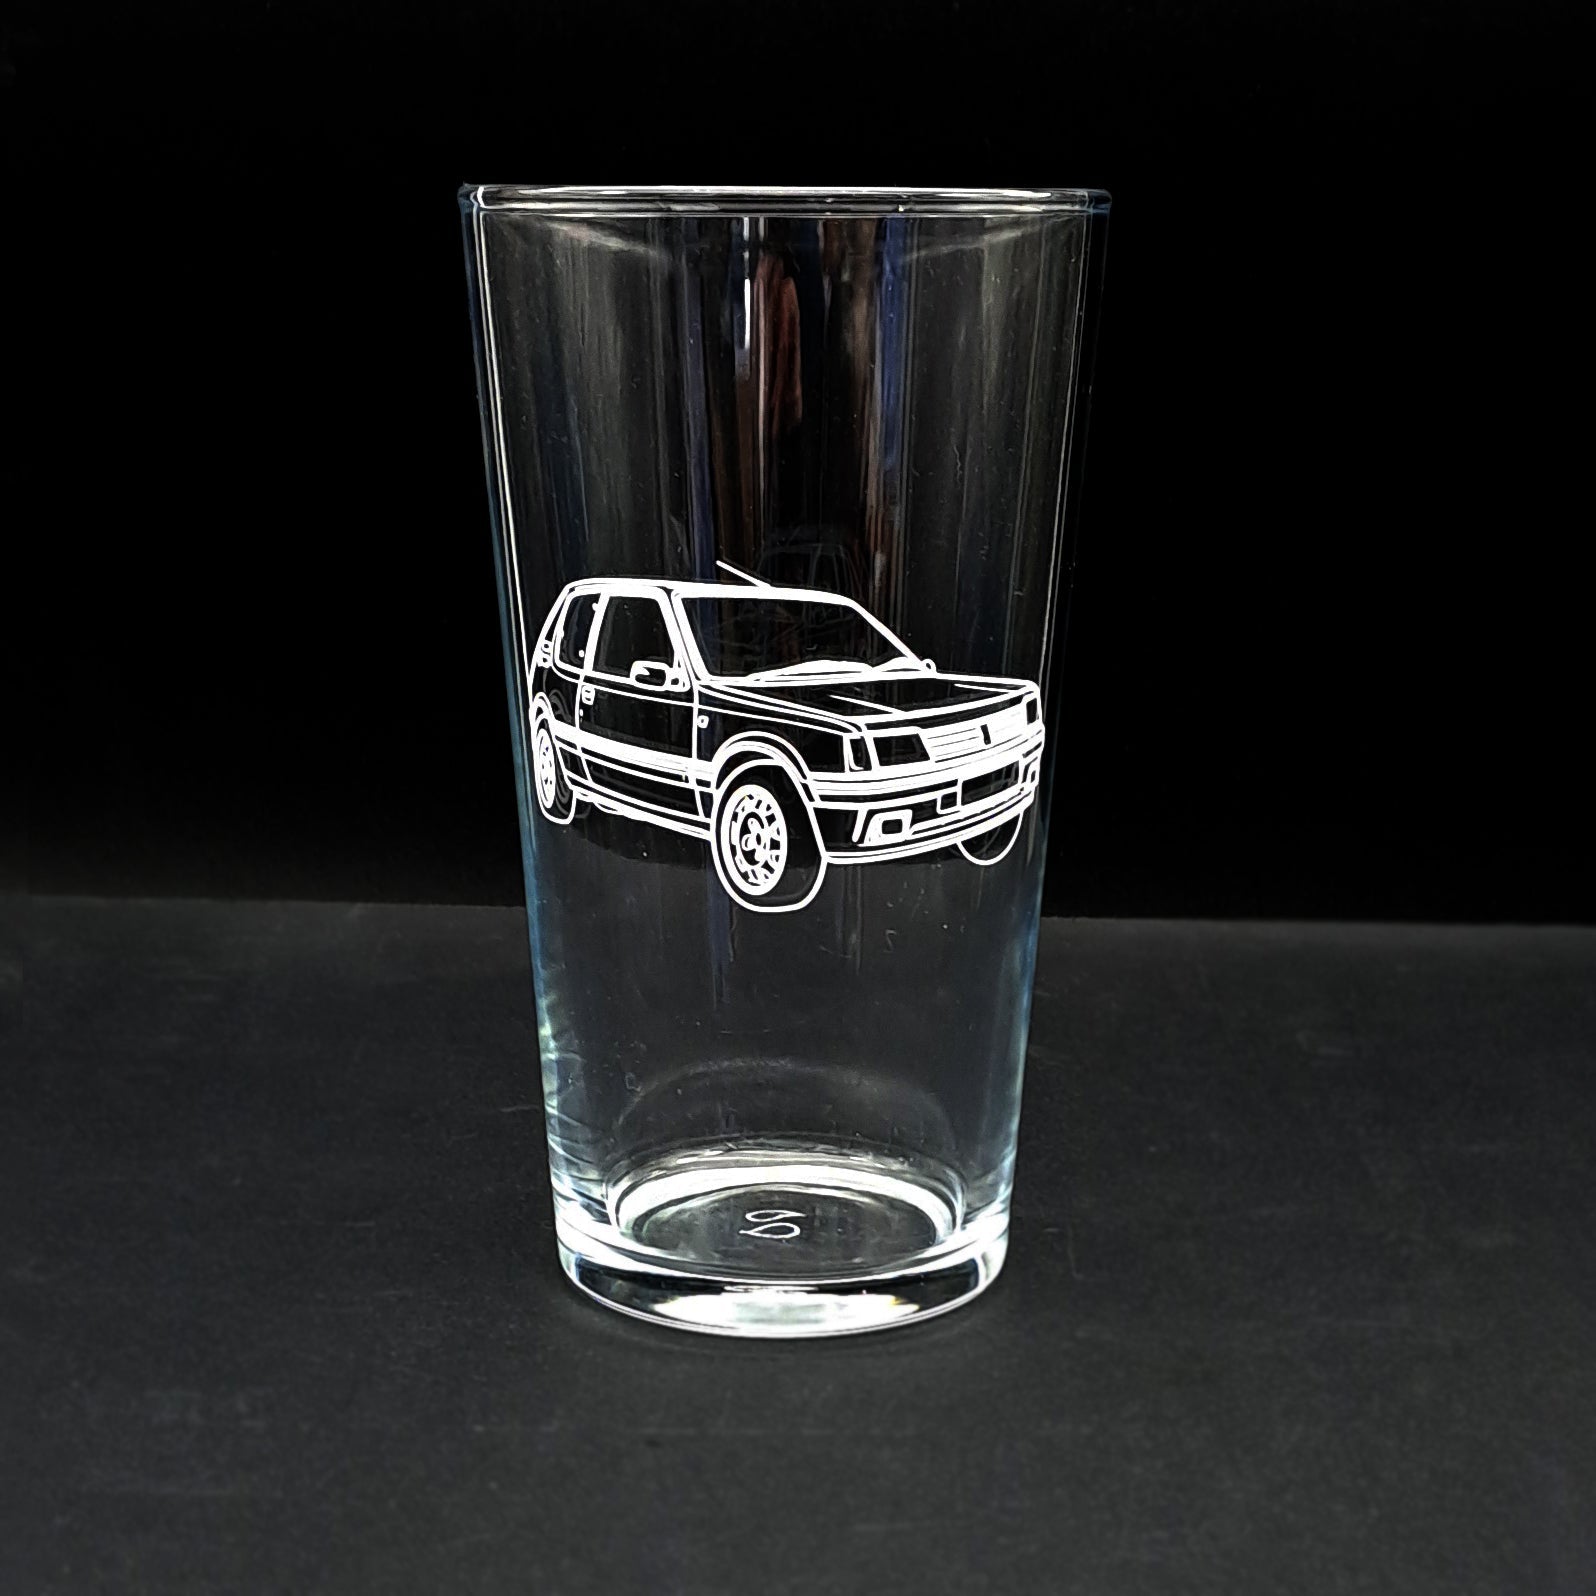 Peugeot 205 Gti Beer Glass | Giftware Engraved